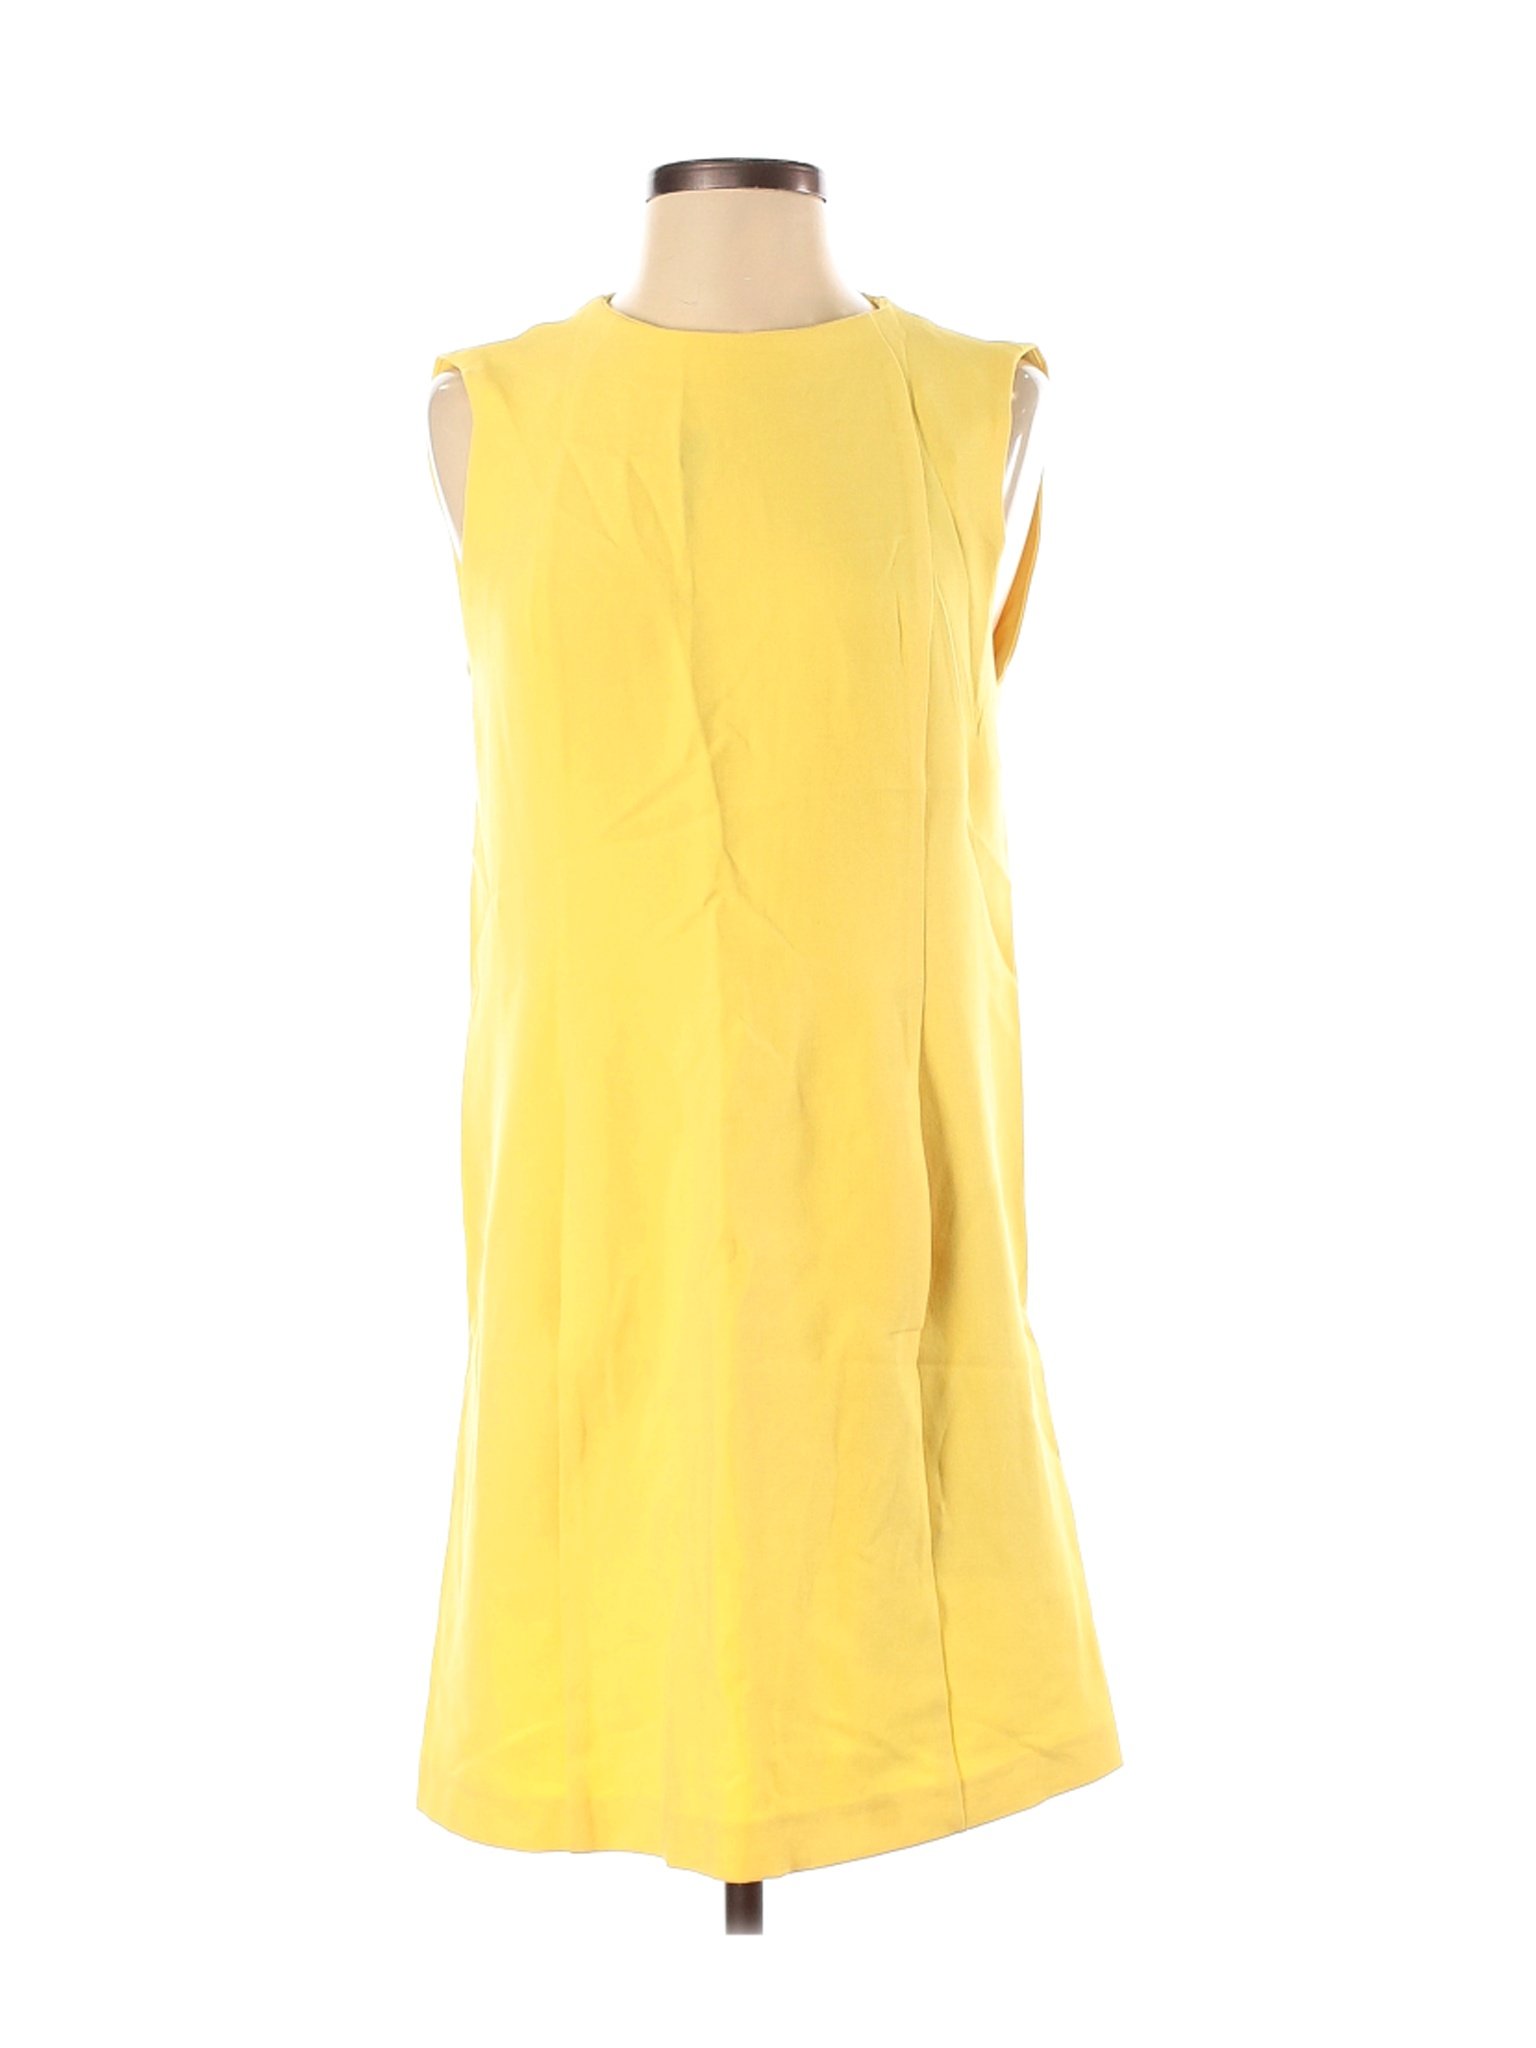 NWT Zara Women Yellow Casual Dress S | eBay